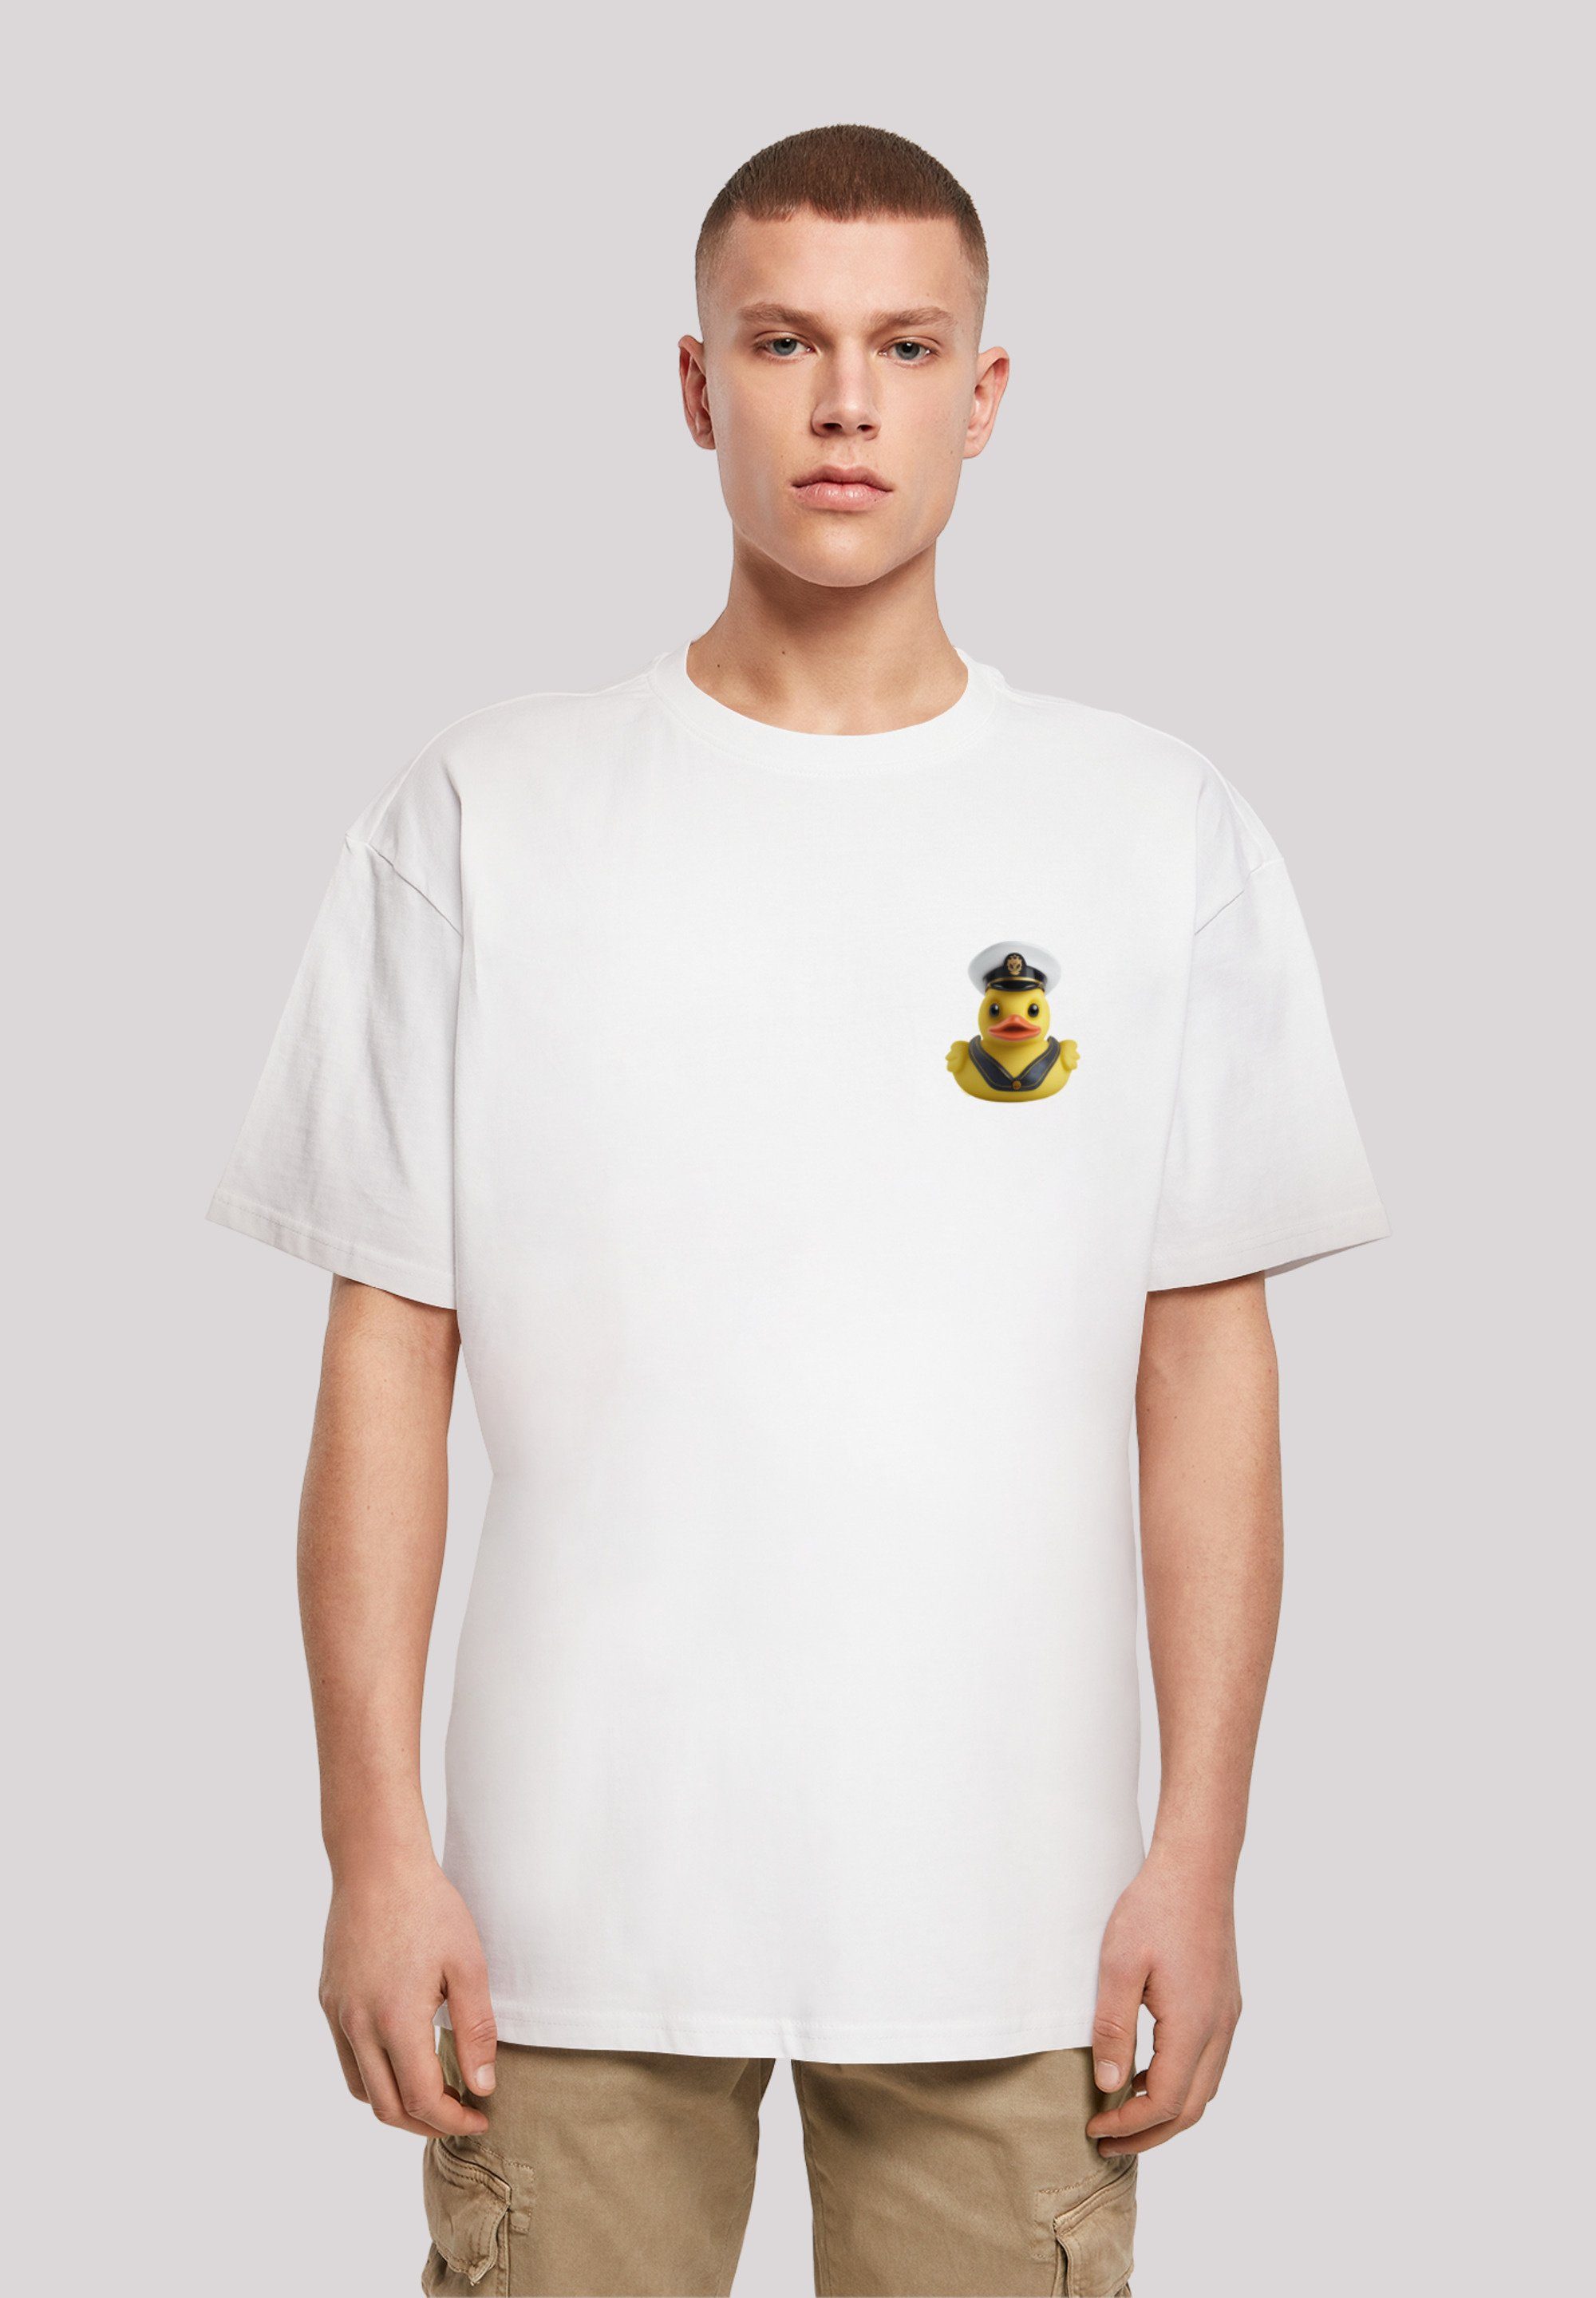 TEE Print Rubber Duck Captain F4NT4STIC OVERSIZE T-Shirt